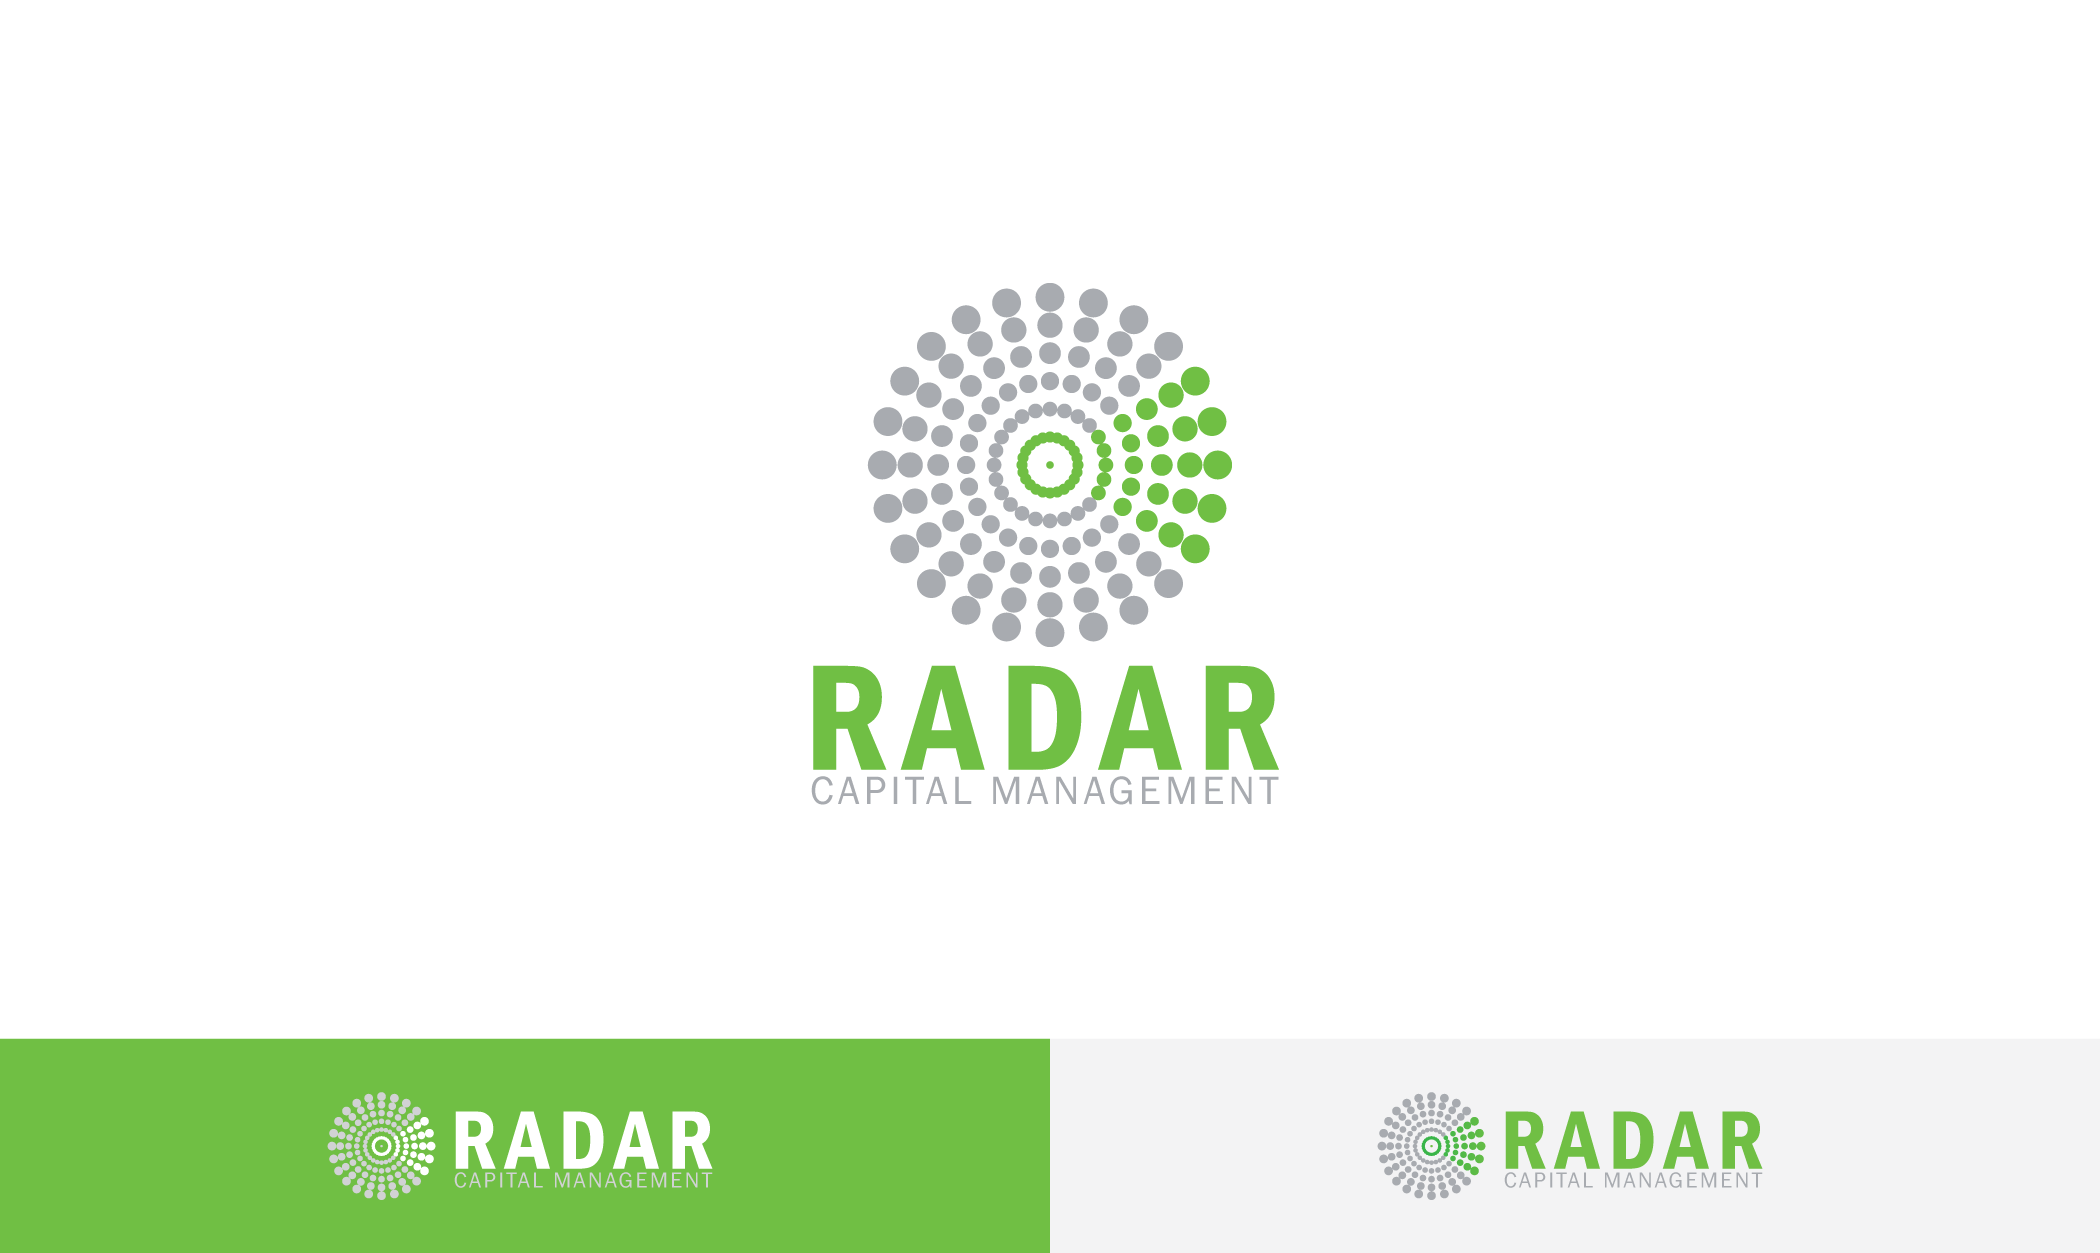 Radar Logo - Logo Design #81 | 'Radar Capital Management' design project ...